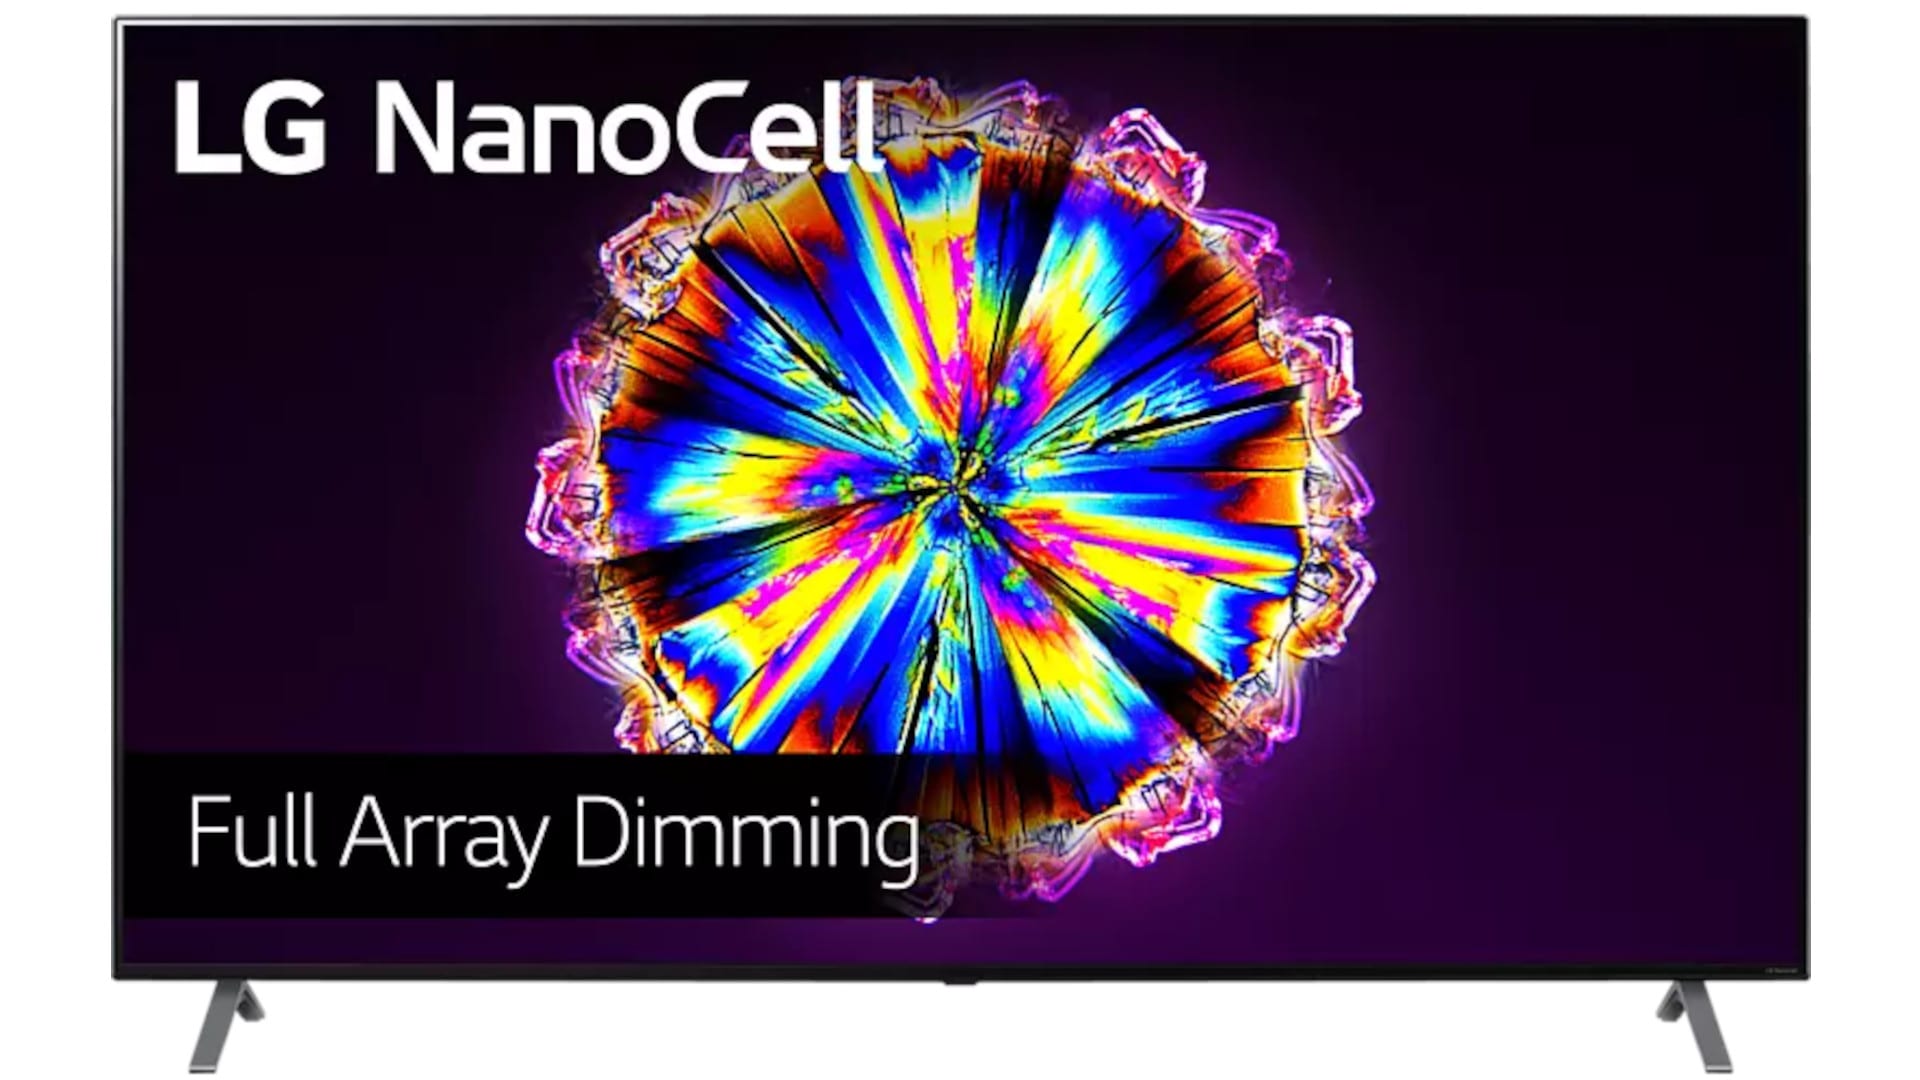 LG Nano Cell